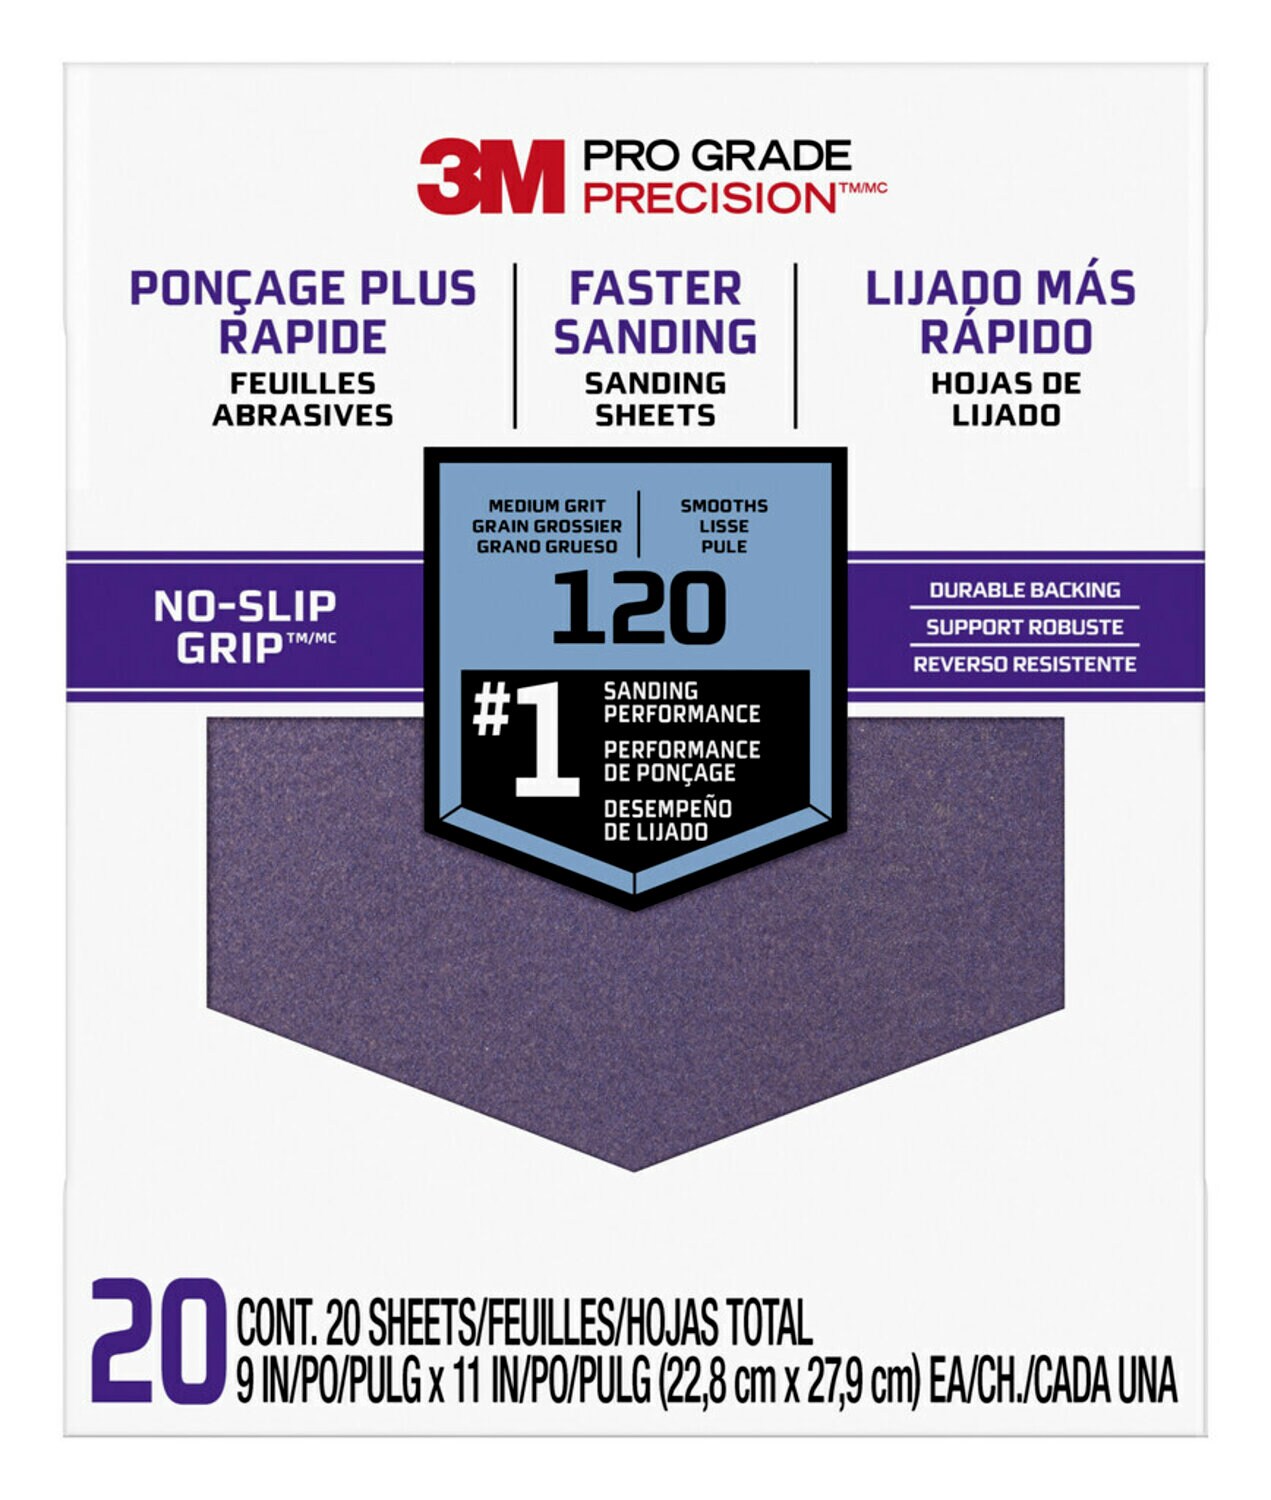 7010417804 - 3M Pro Grade Precision Faster Sanding Sanding Sheets 120 grit Medium,
27120TRI-20, 9 in x 11 in, 20/pk